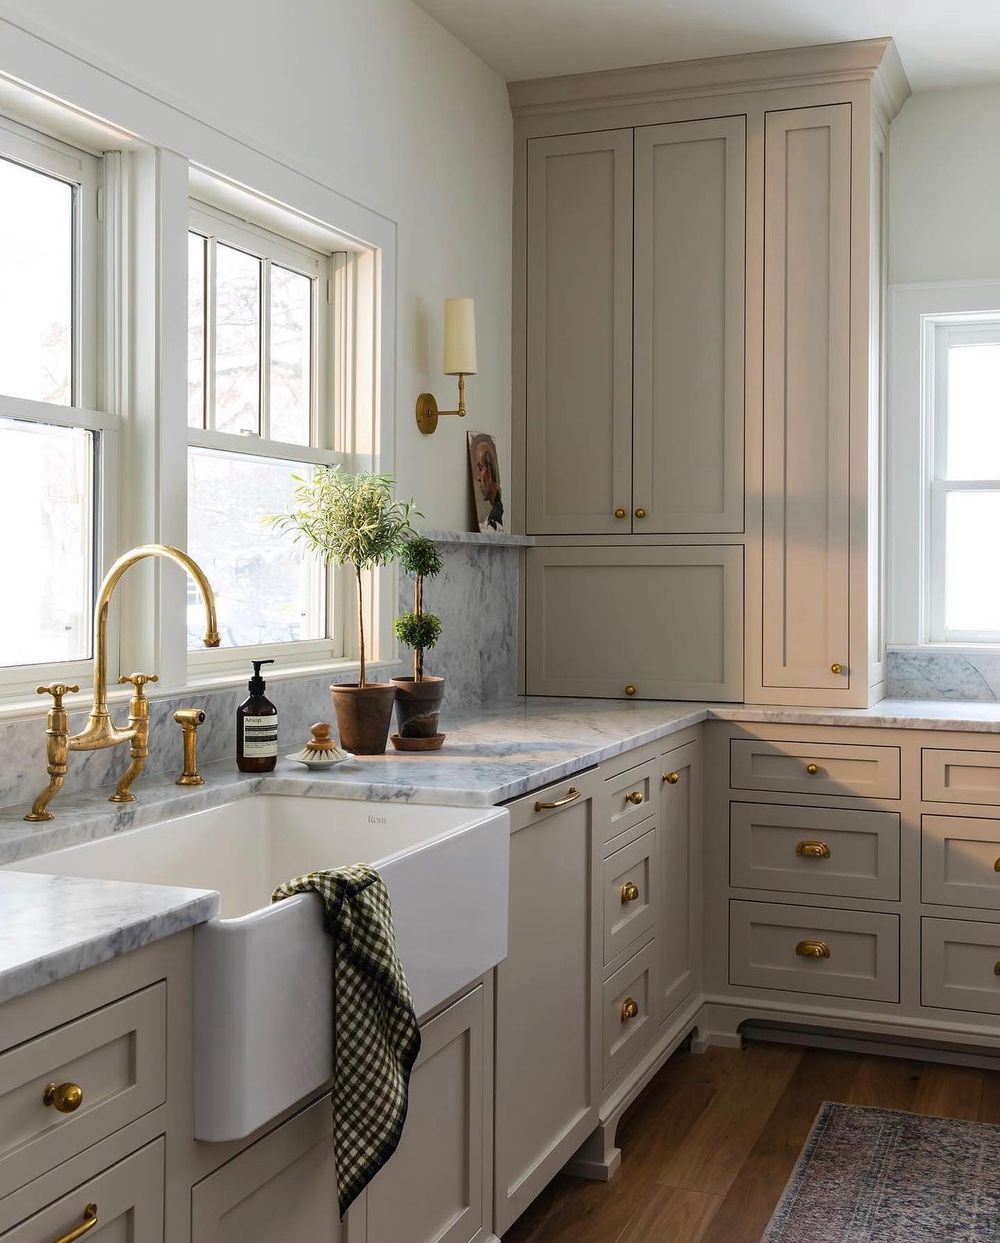 Marble kitchen countertops gold bridge faucet @oho_interiors